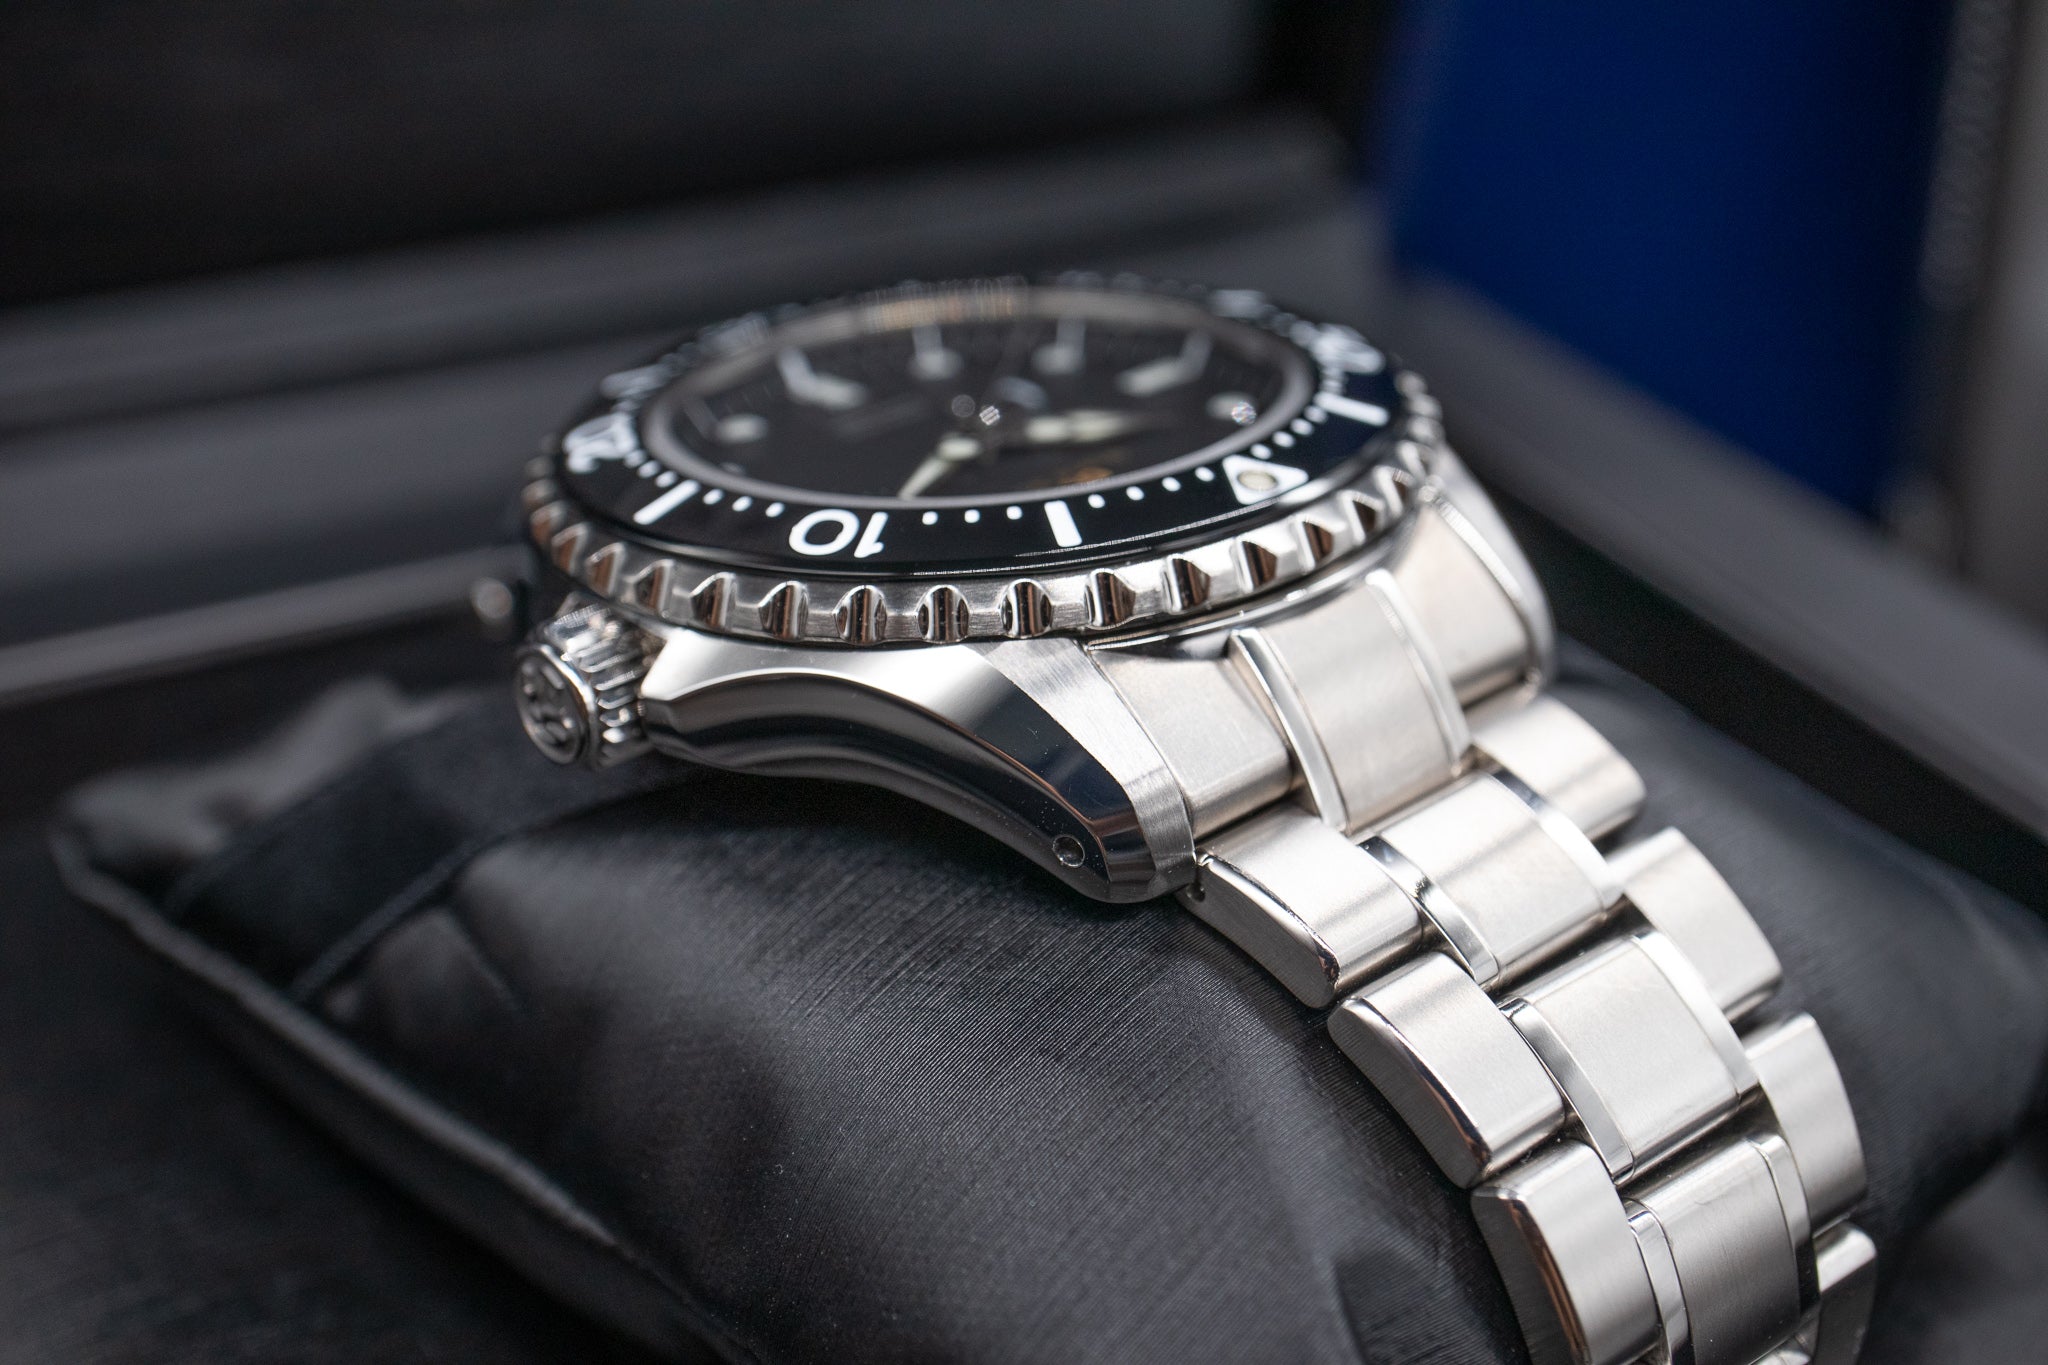 Pre-Owned: Grand Seiko SBGA231 – Belmont Watches